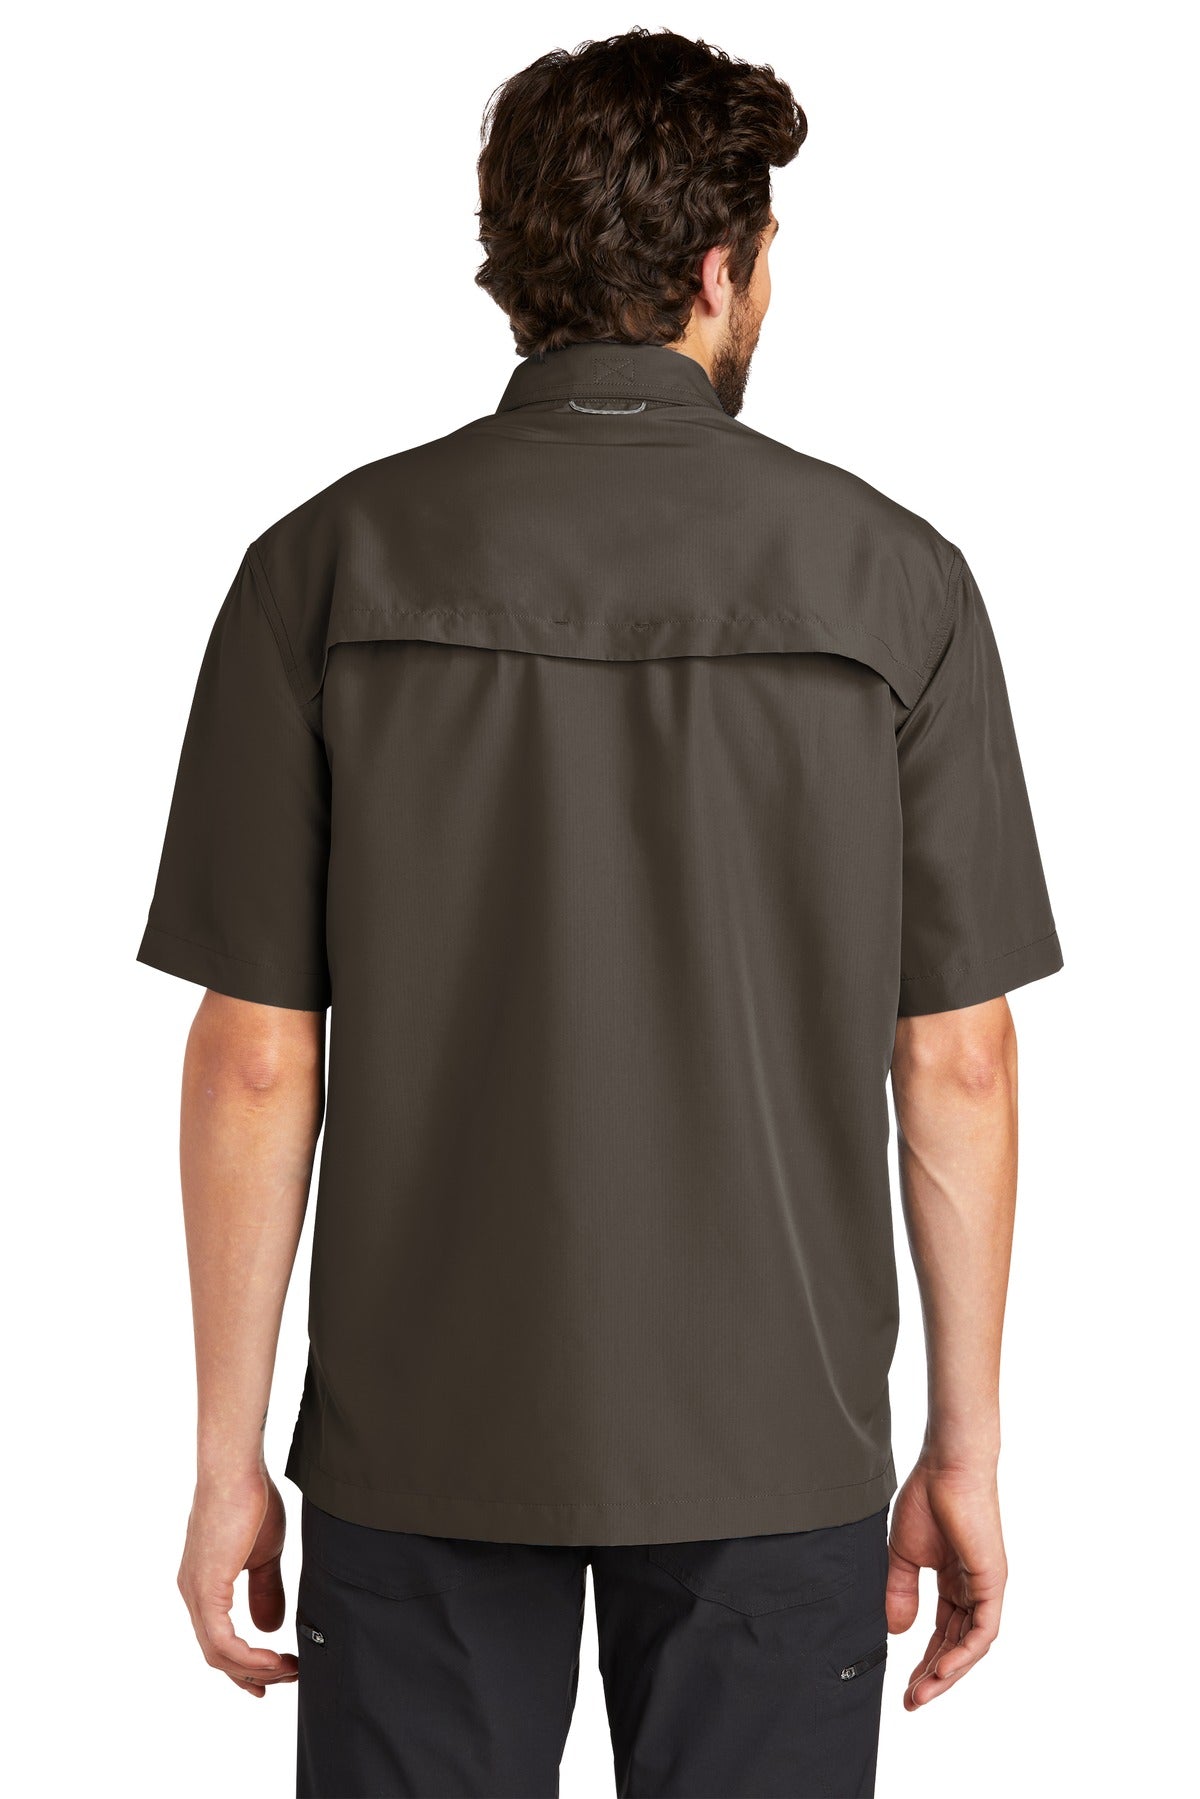 Eddie Bauer® - Short Sleeve Performance Fishing Shirt. EB602 - DFW Impression